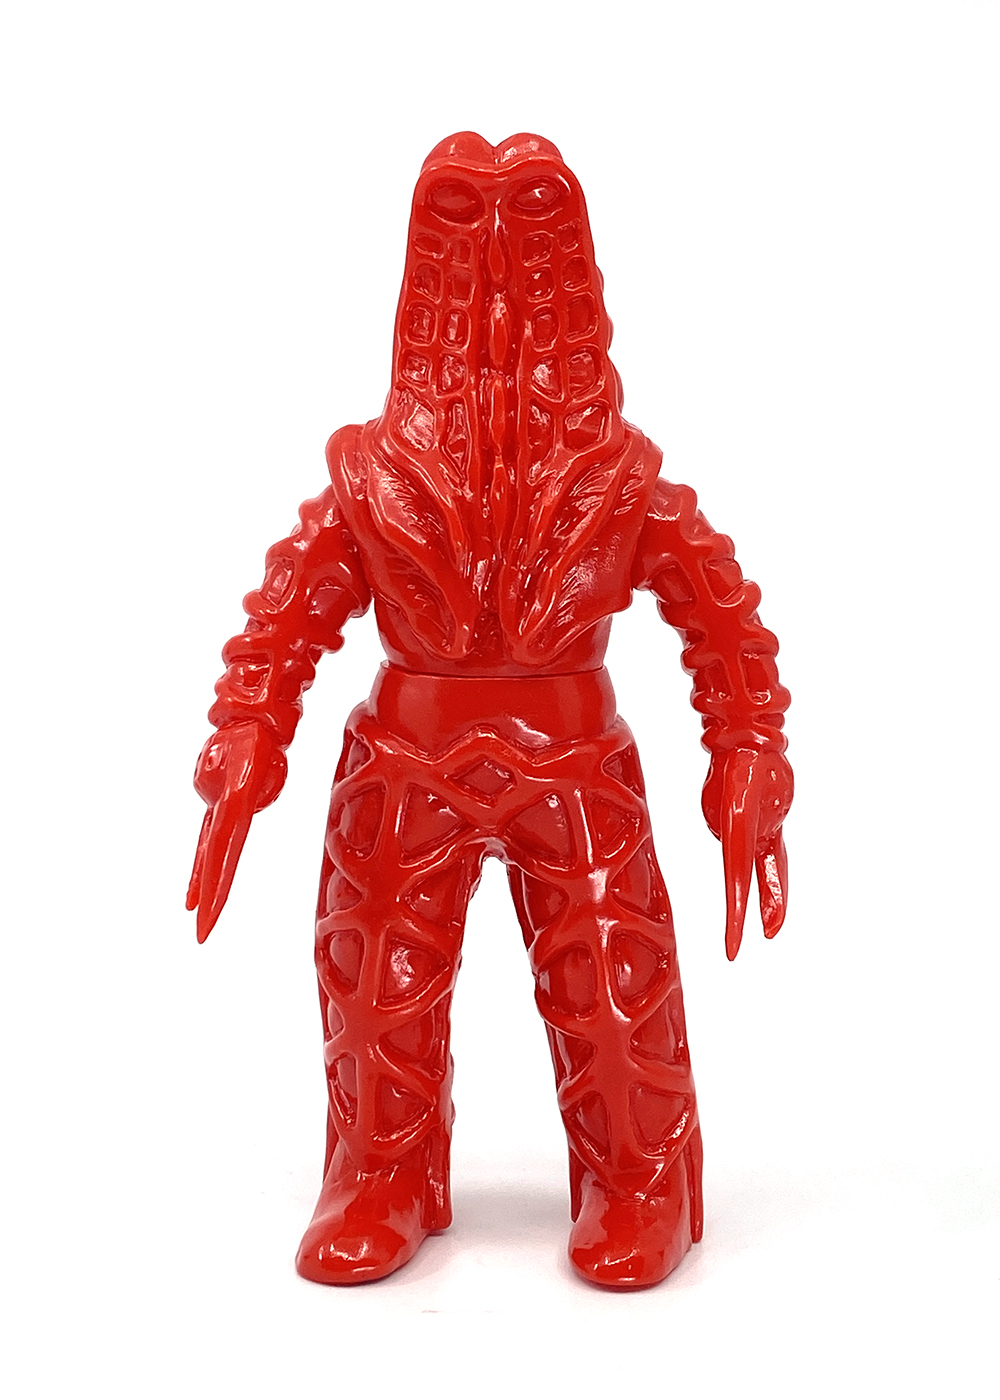 Bullmark UltraSeven Kaiju Alien Godola red unpainted Sofubi figure